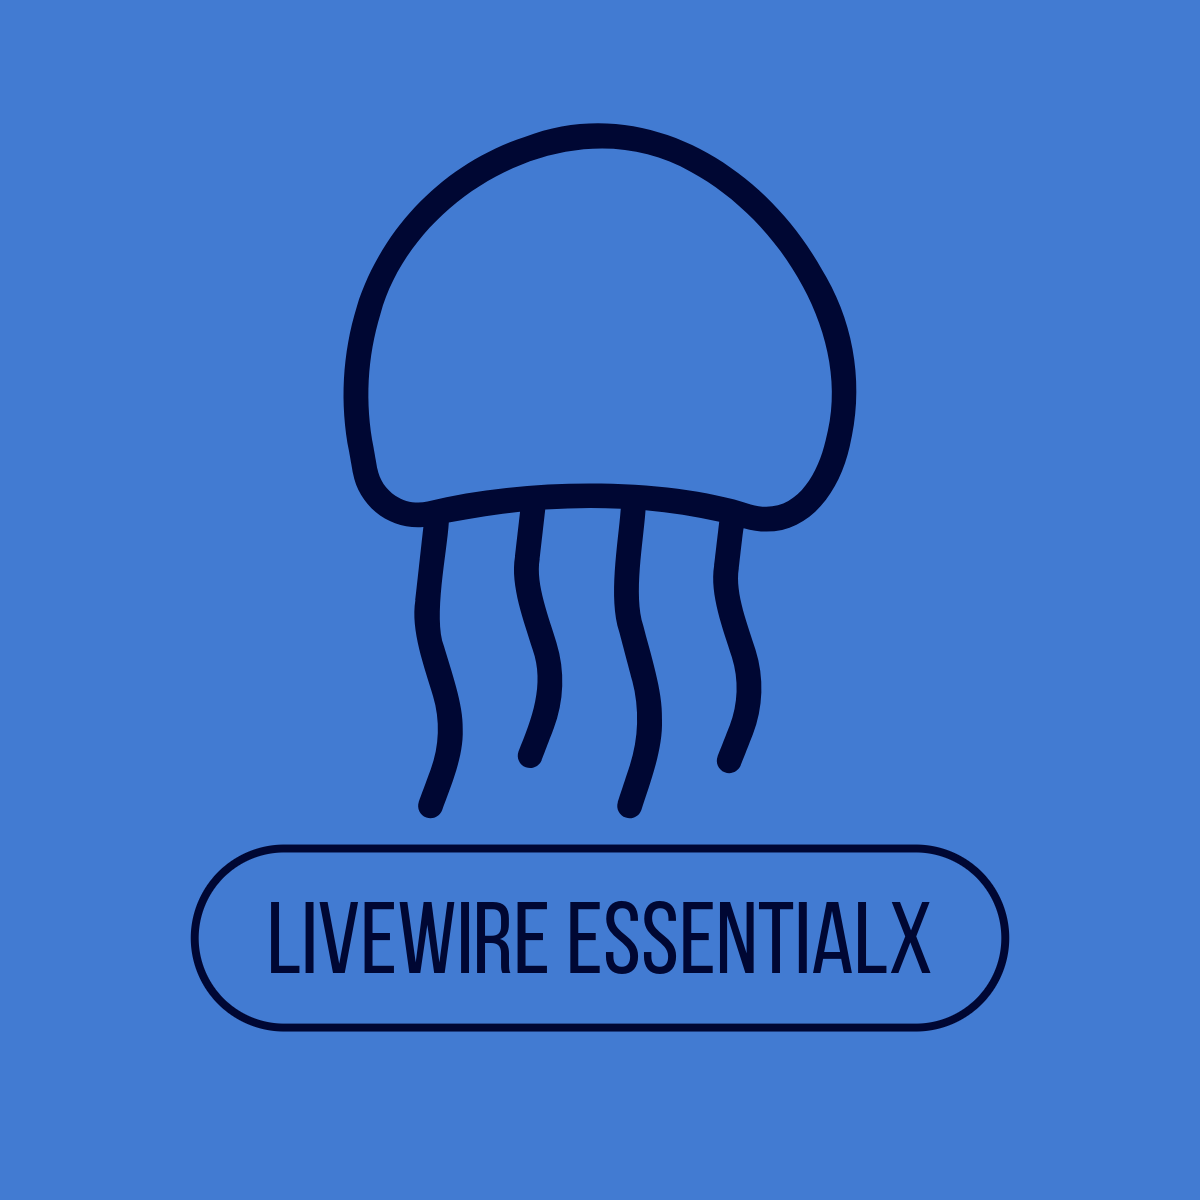 Livewire Essentialx